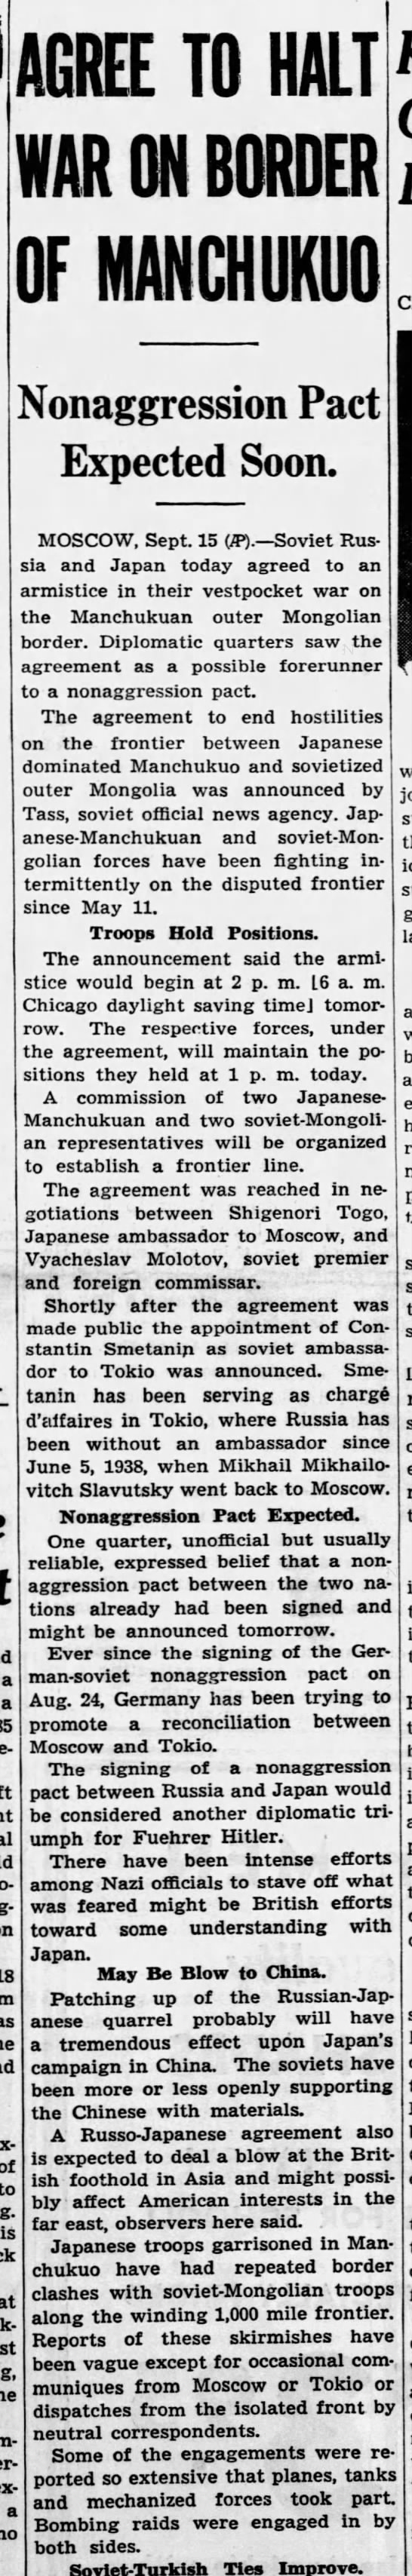 Japan and Soviet Union agree to an armistice prior to Soviet invasion of Poland - 